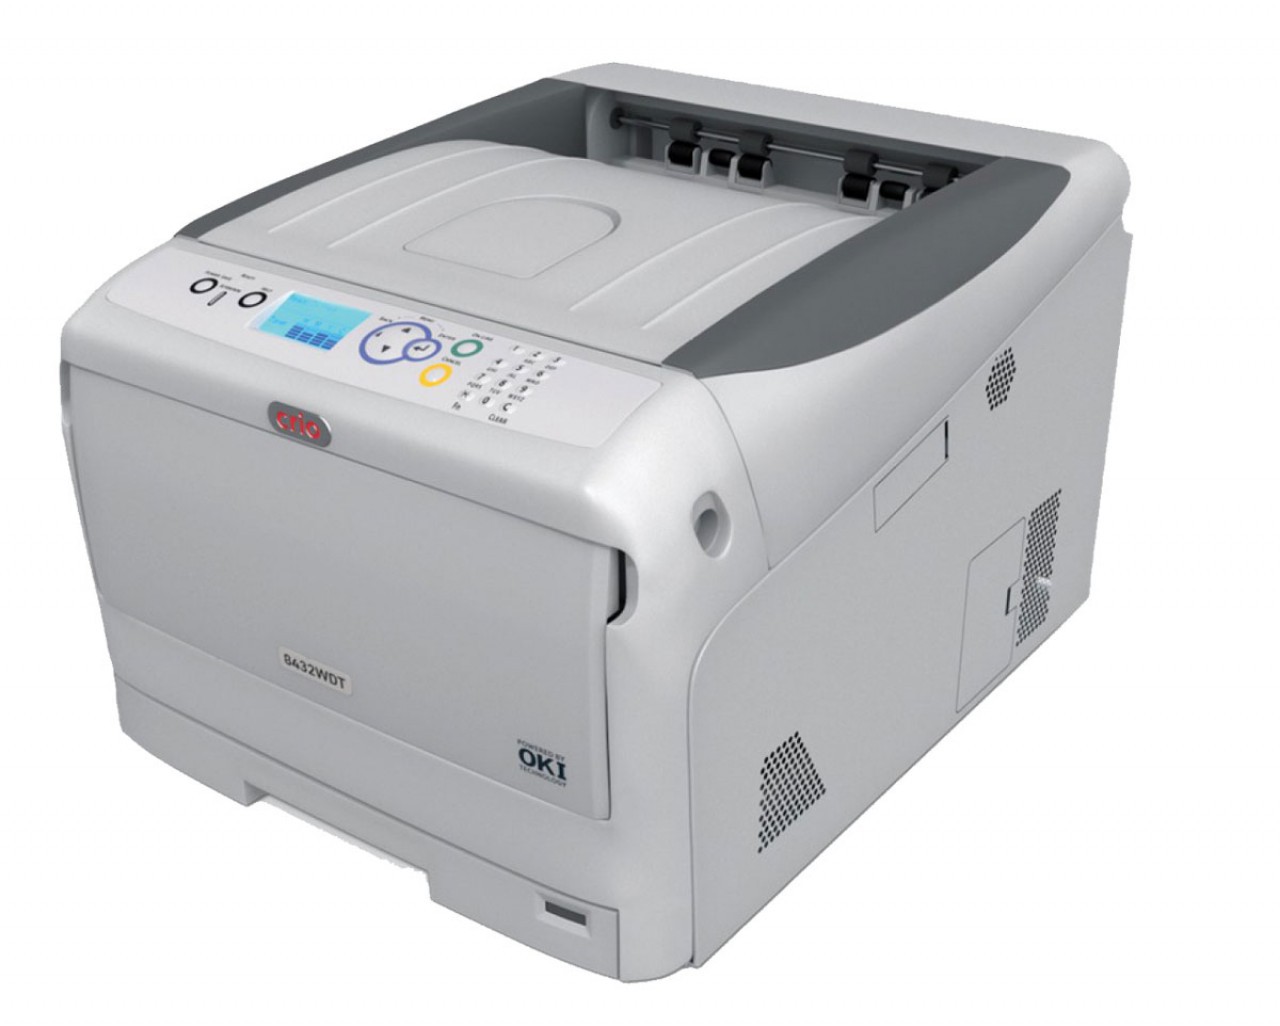 Crio 8432WDT White Toner Transfer Printer